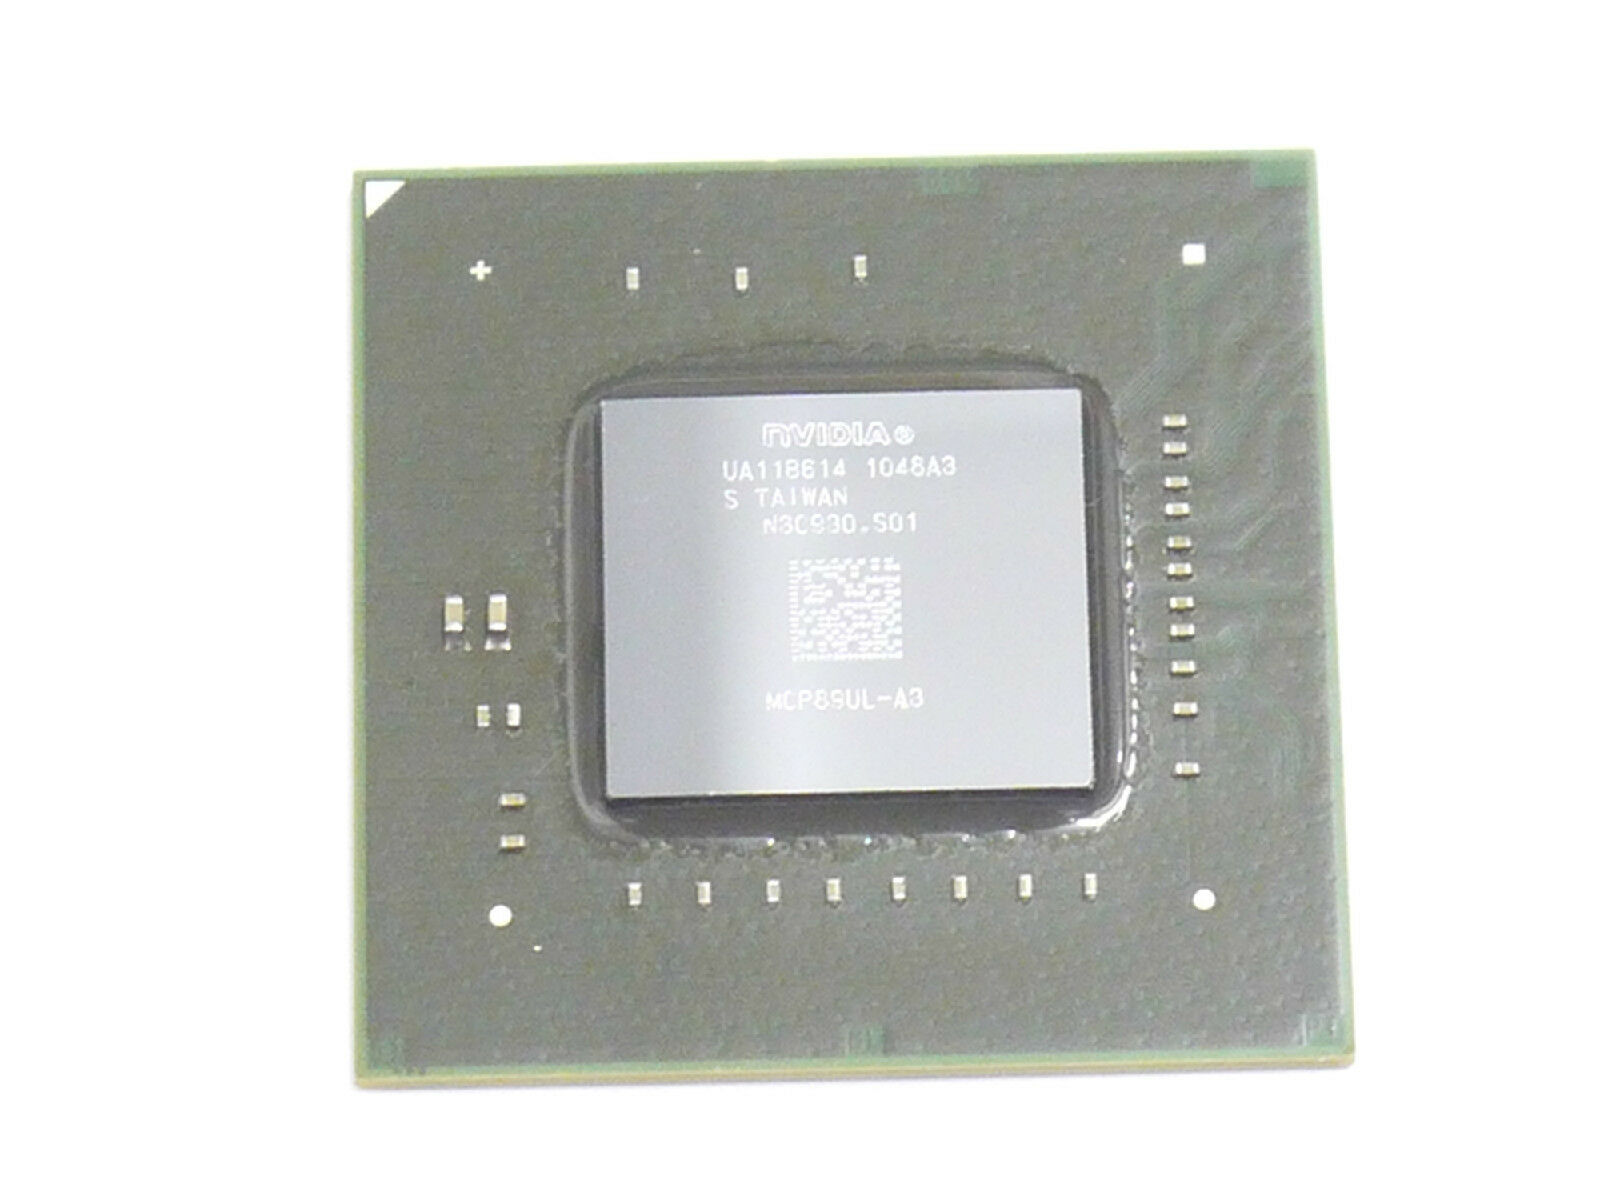 5 Pcs New Nvidia Mcp89ul-a3 Mcp89ul A3 Bga Chip Chipset With Solder Balls